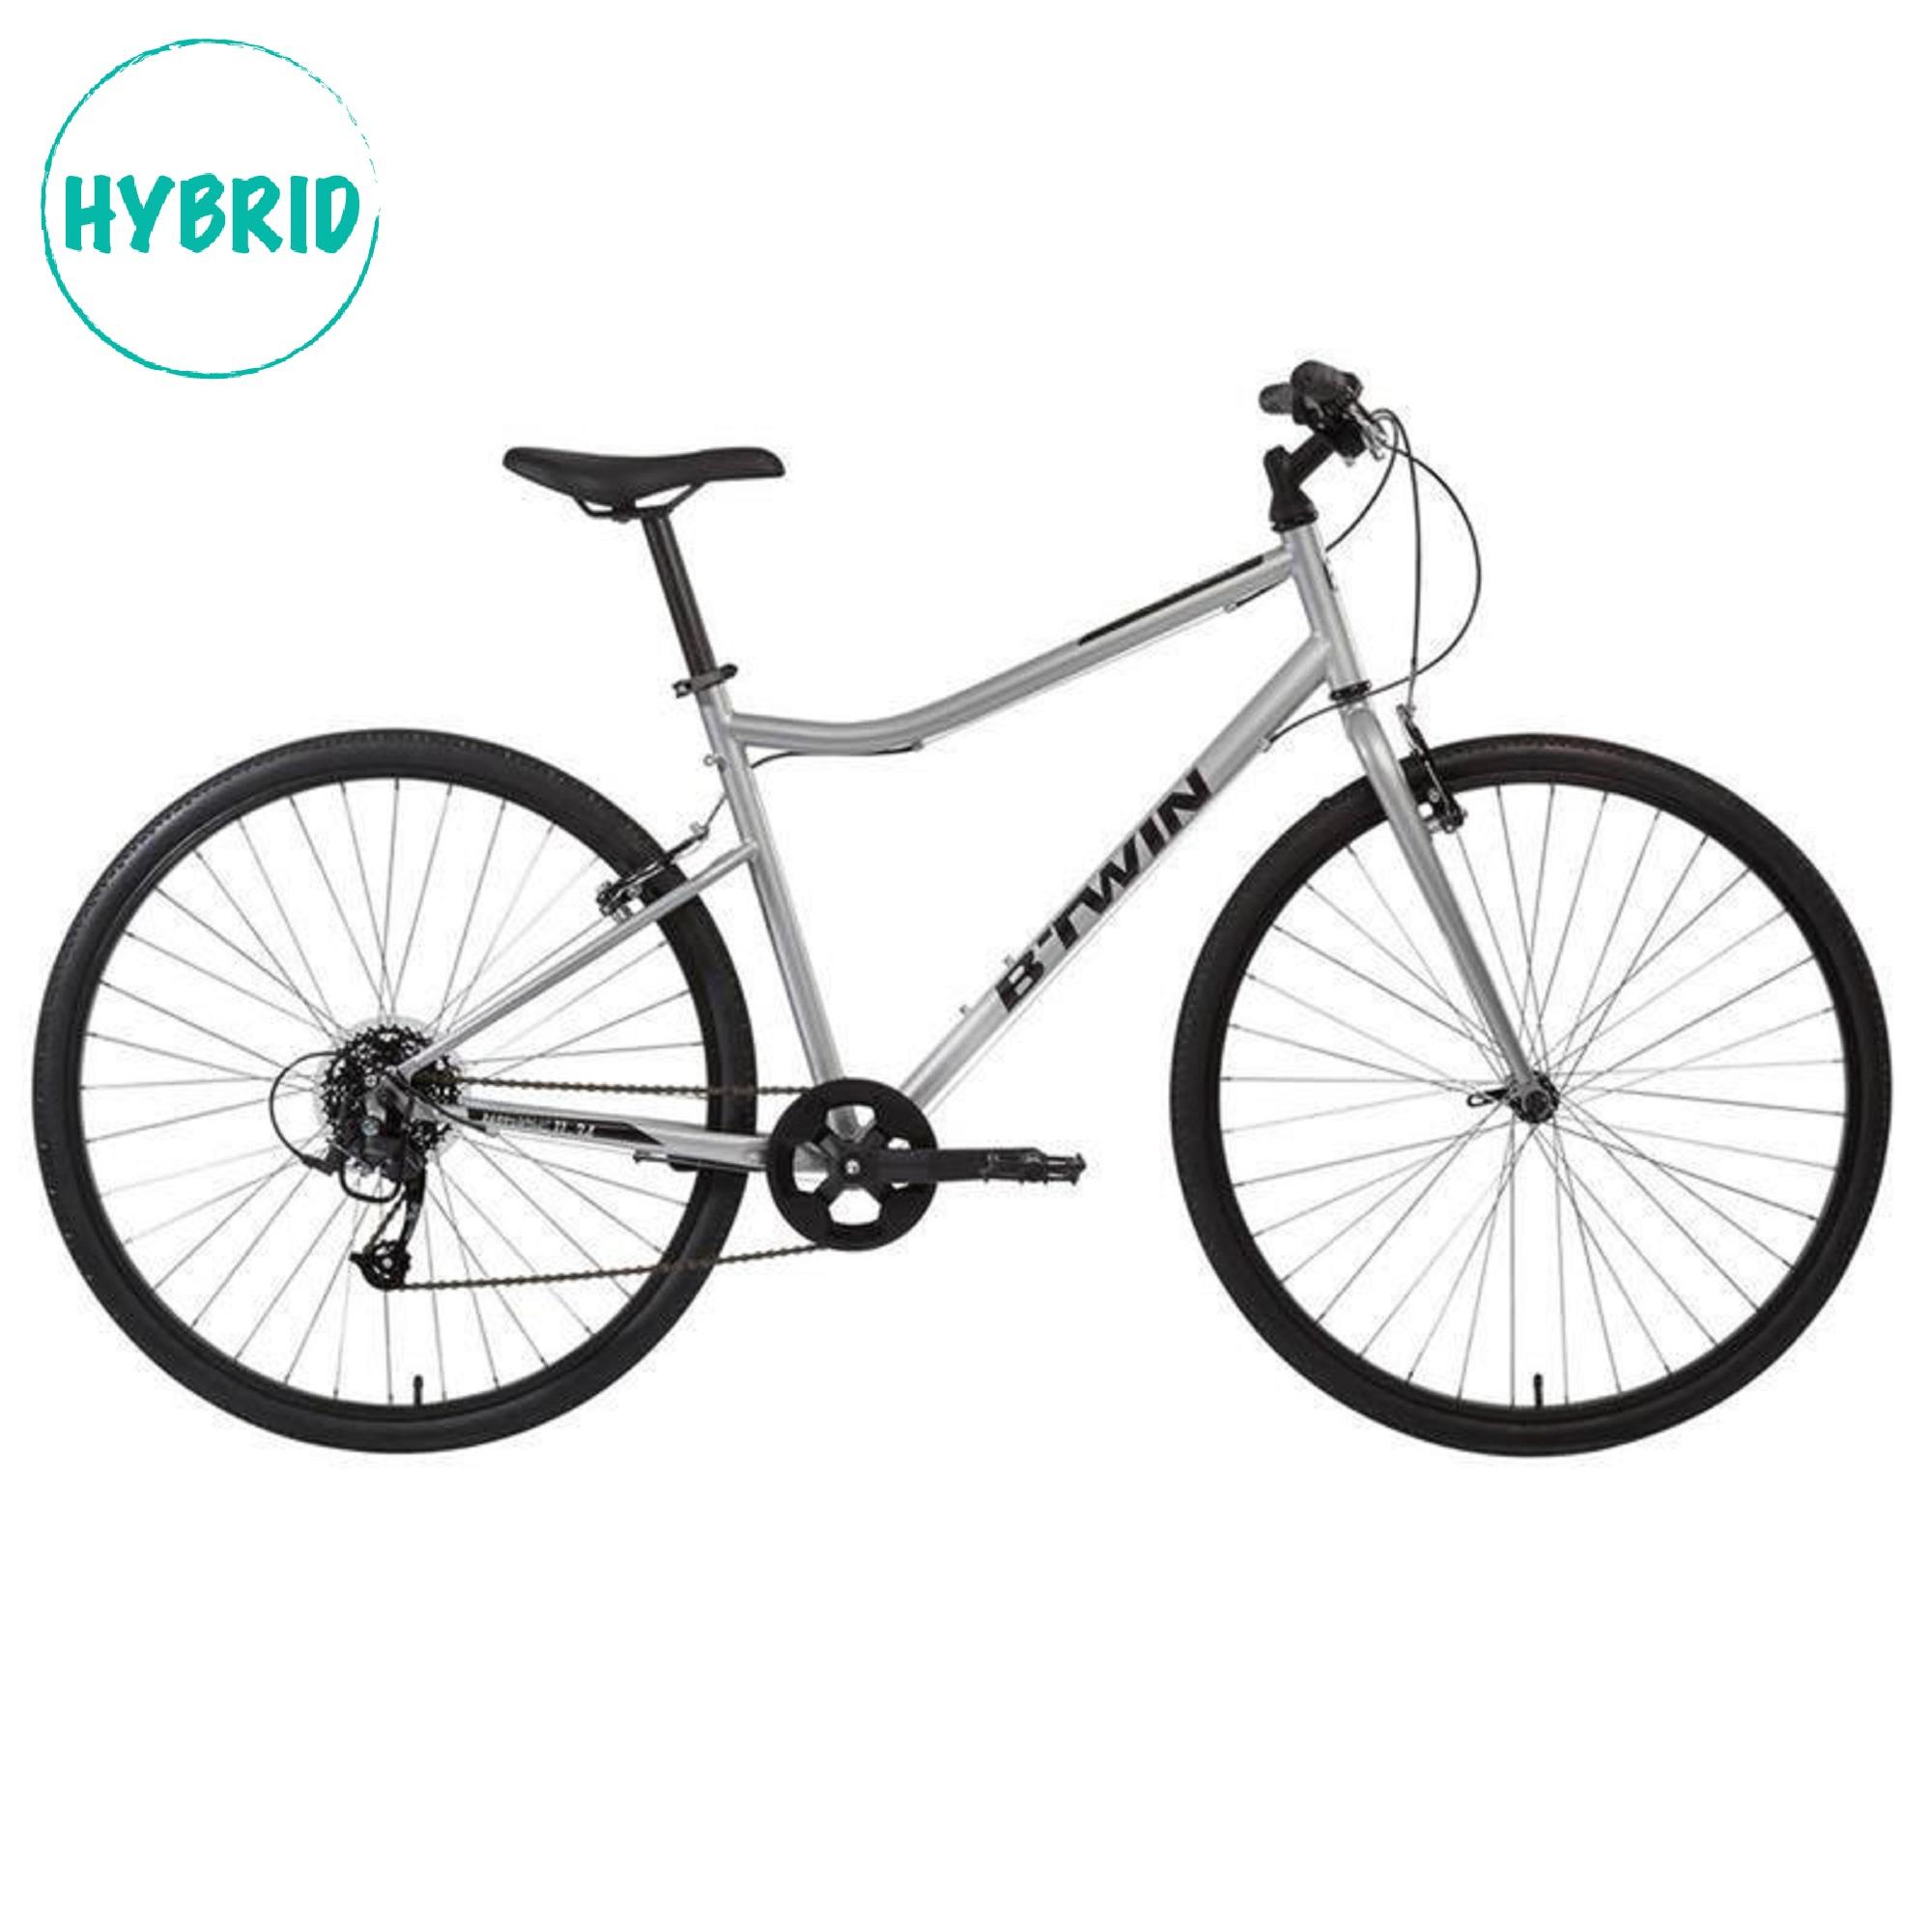 decathlon hybrid bikes